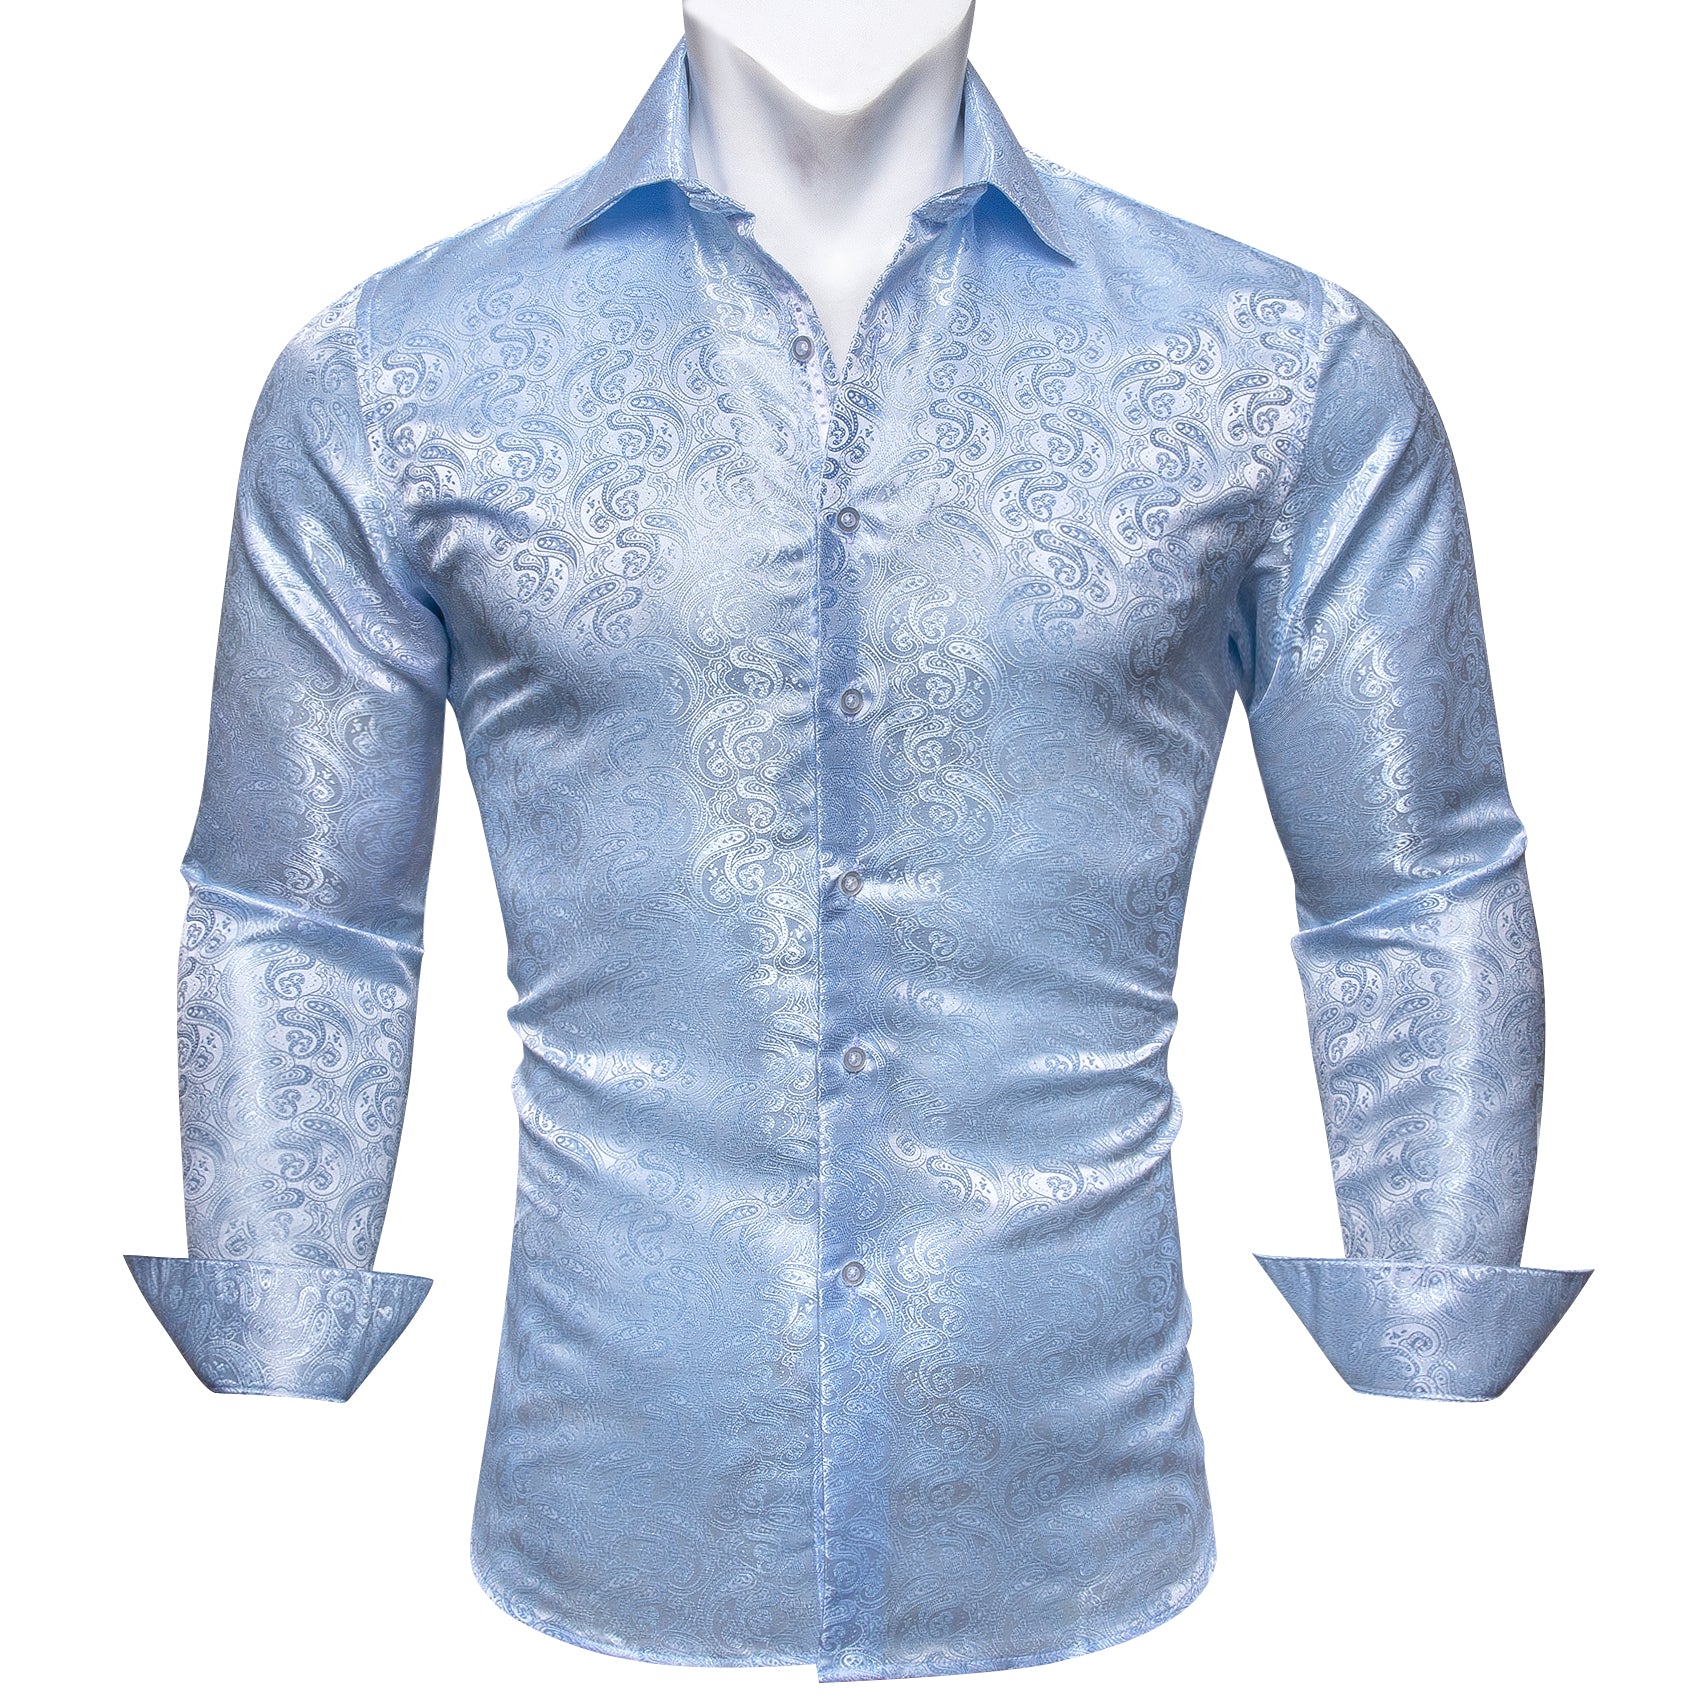 Barry.wang Sky Blue Paisley Silk Shirt